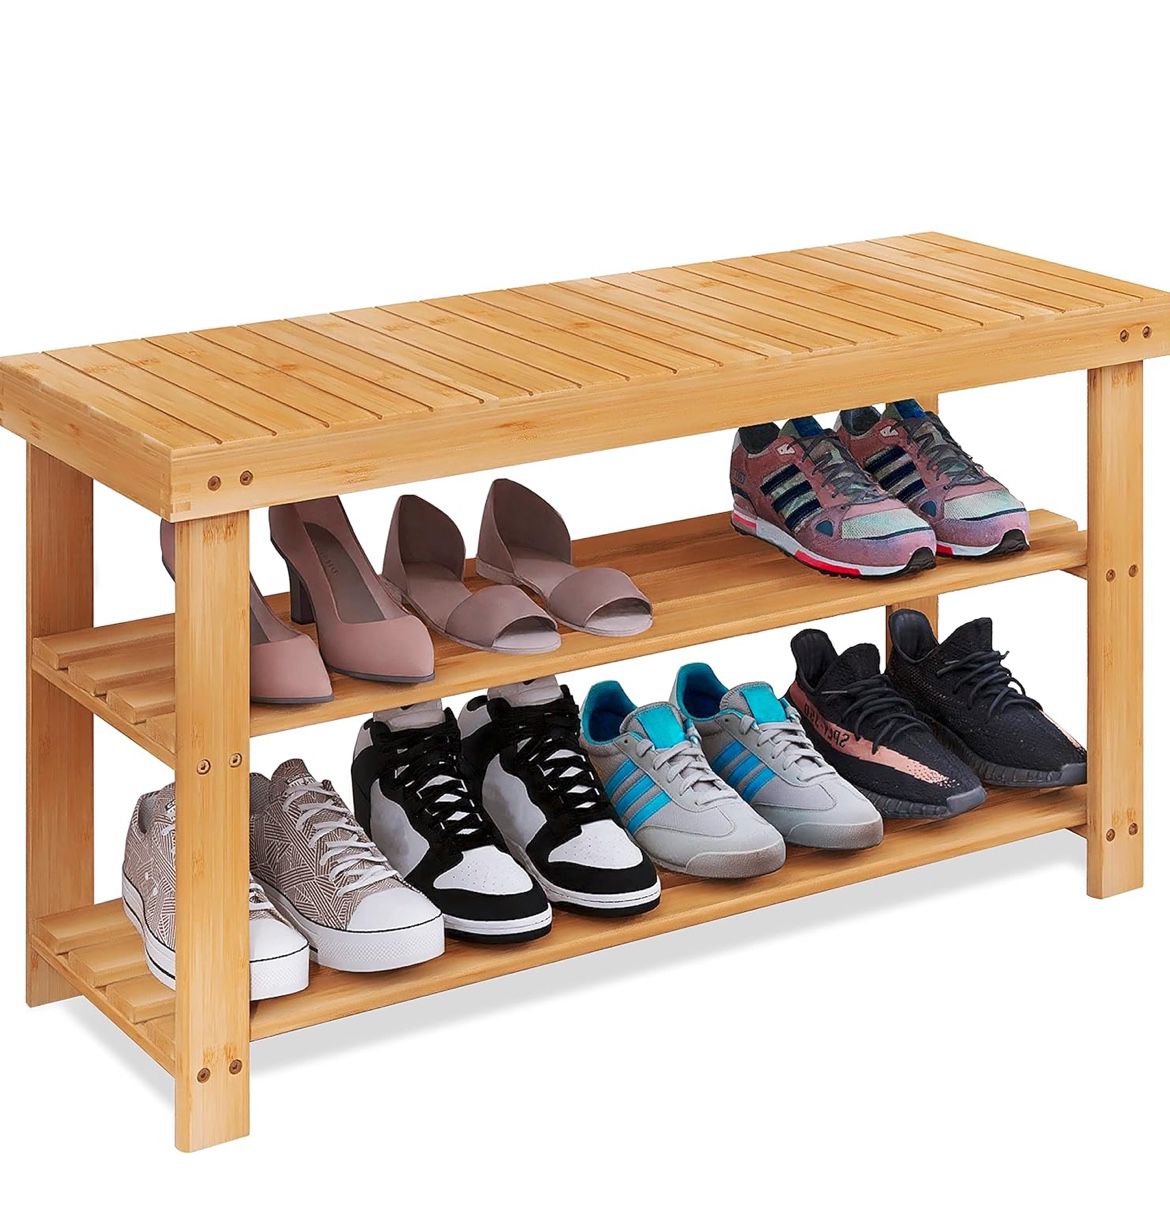 Bamboo Shoe Rack Bench, 3-Tier Shoe Organizer Storage Shelf for Entryway Hallway Bathroom Living Room (Natural)